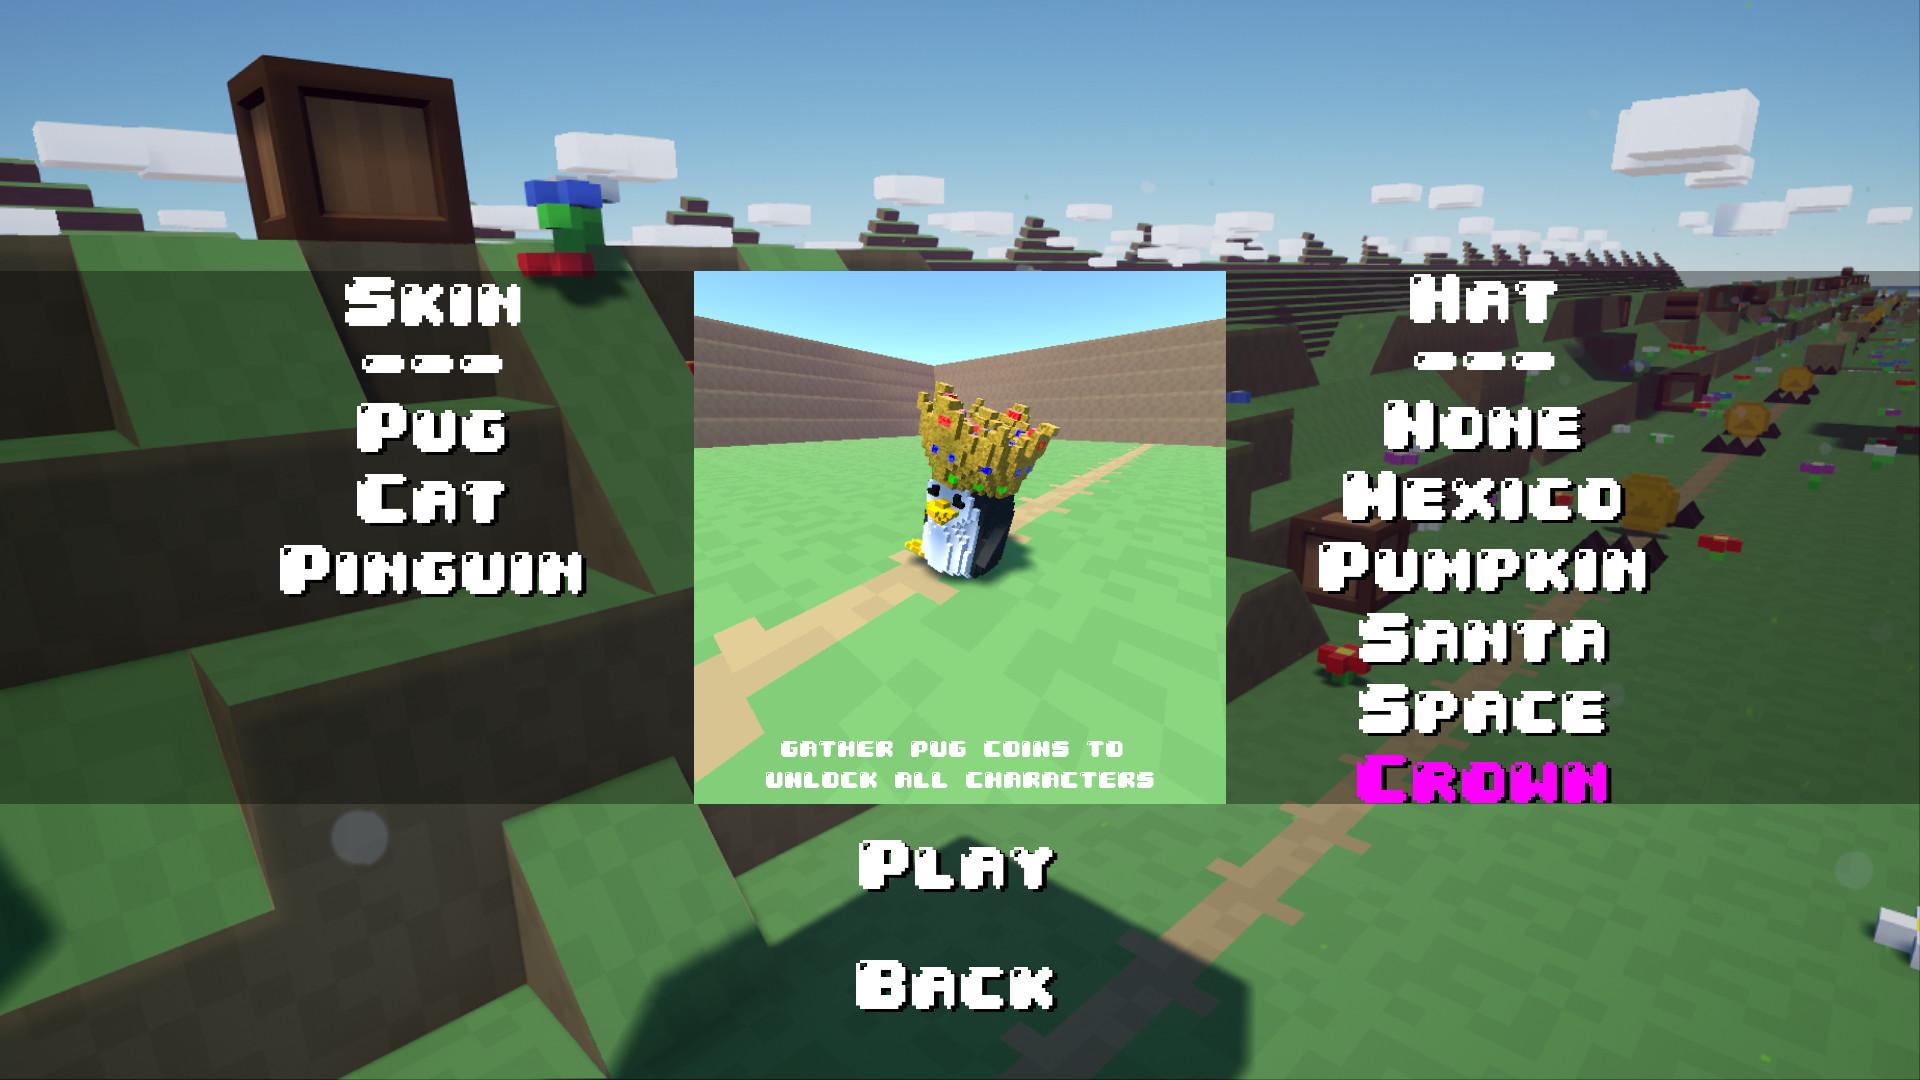 Screenshot №2 from game Turbo Pug 3D